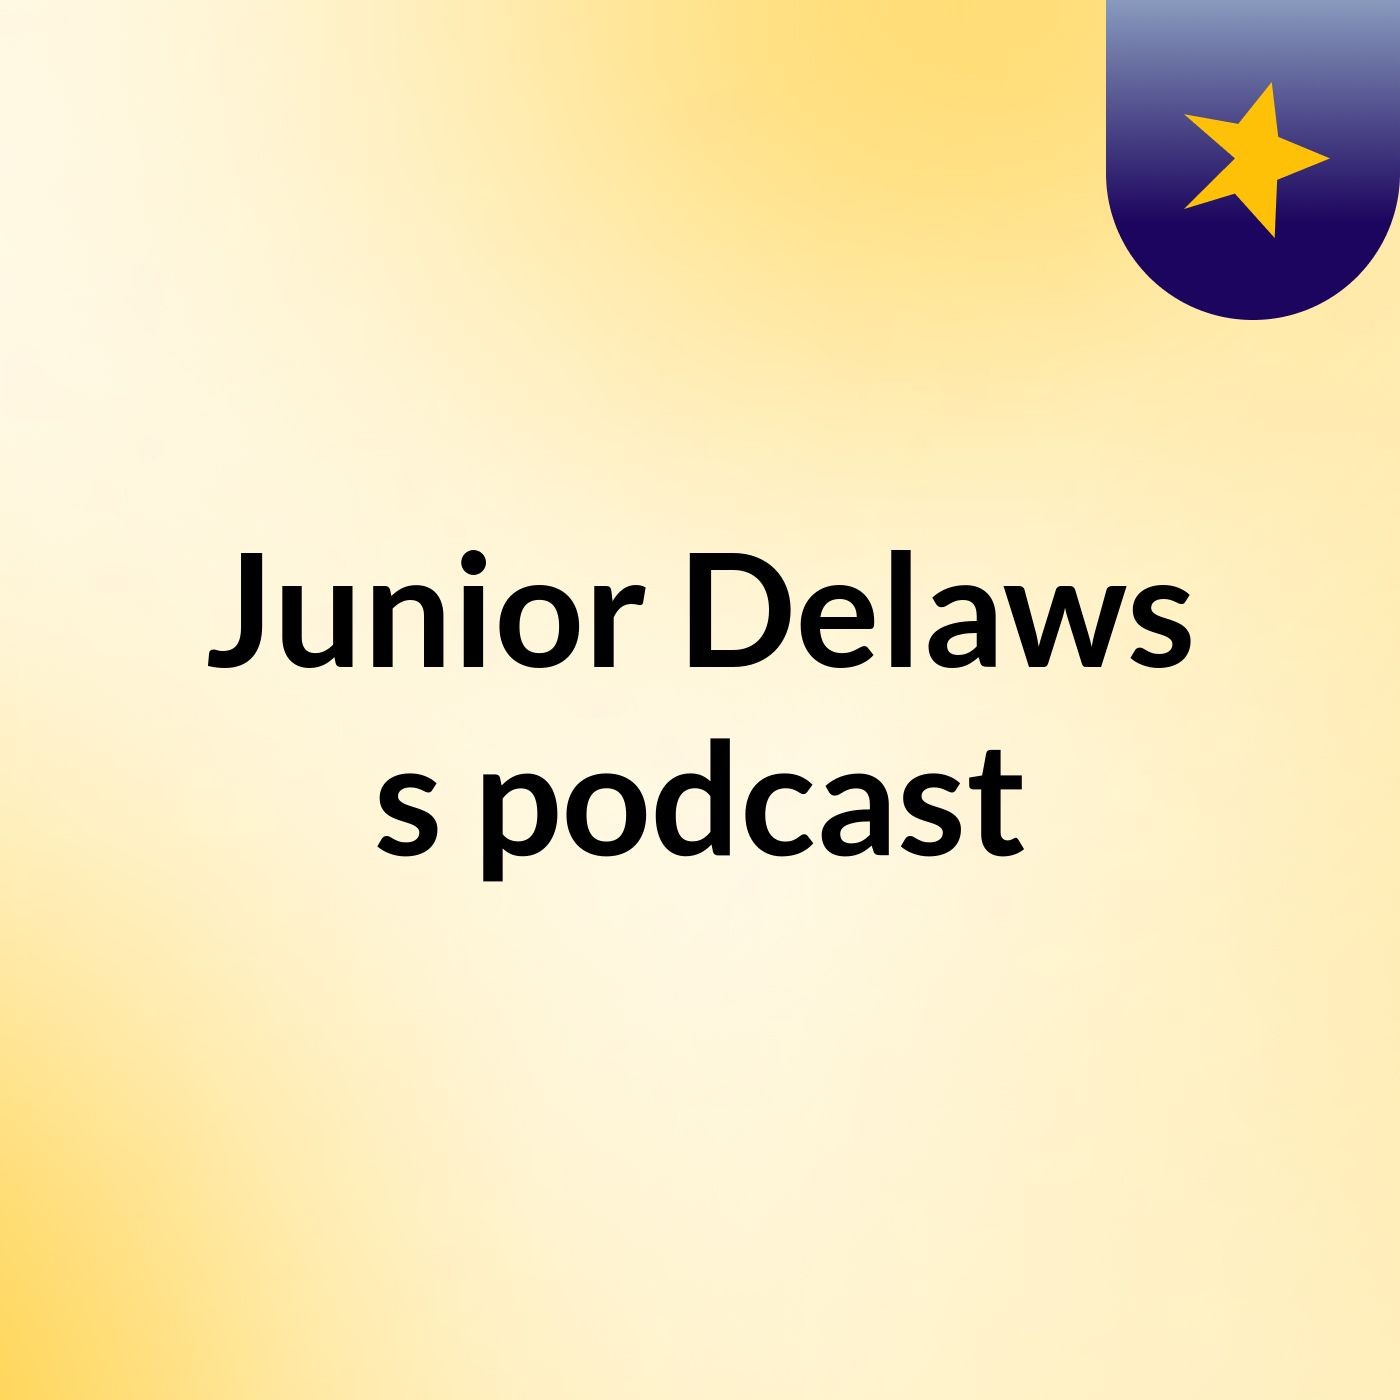 Episode 4 - Junior Delaws's podcast